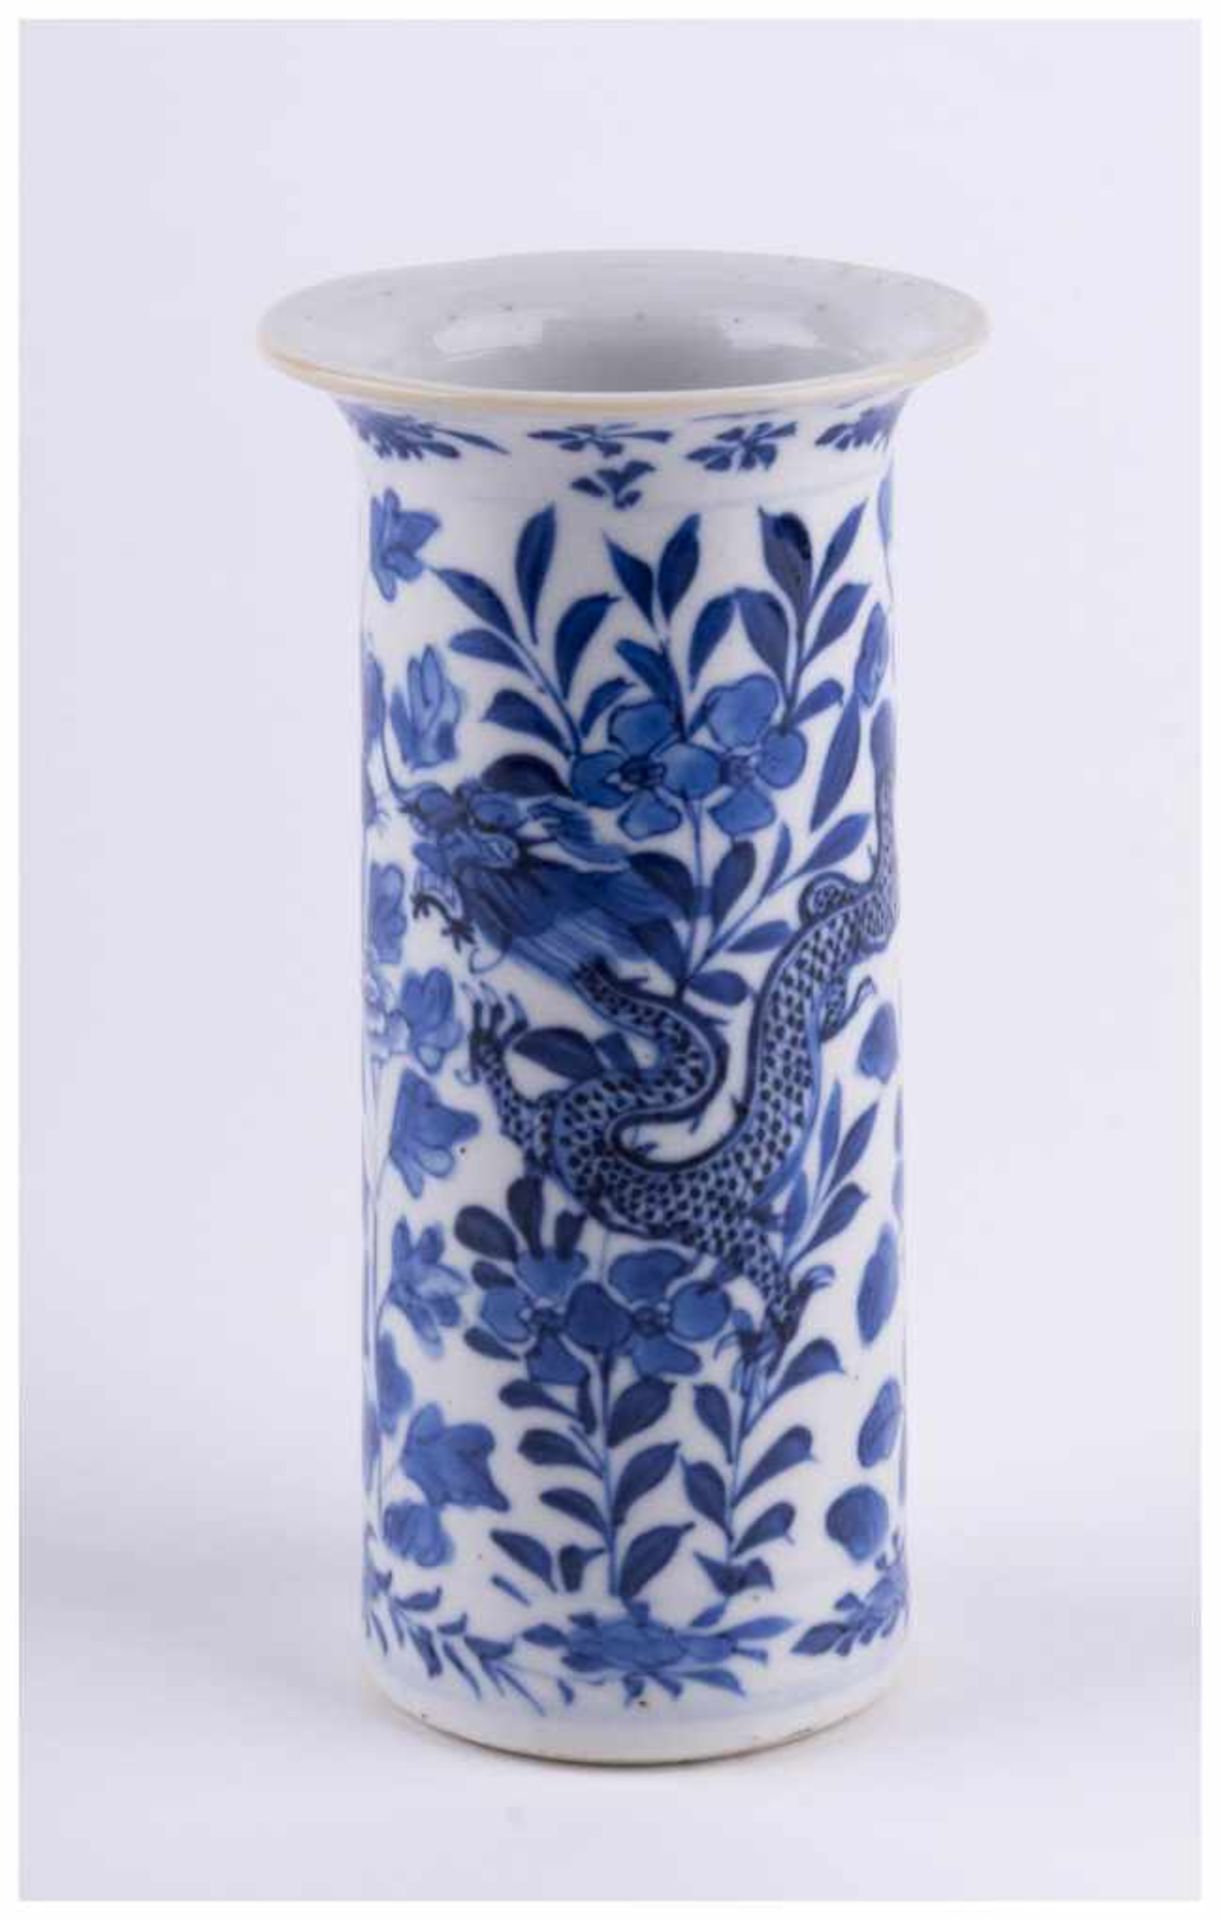 Stangenvase China 19./20. Jhd. / Vase, China 19th/20th century - Blau-weiß Malerei [...]